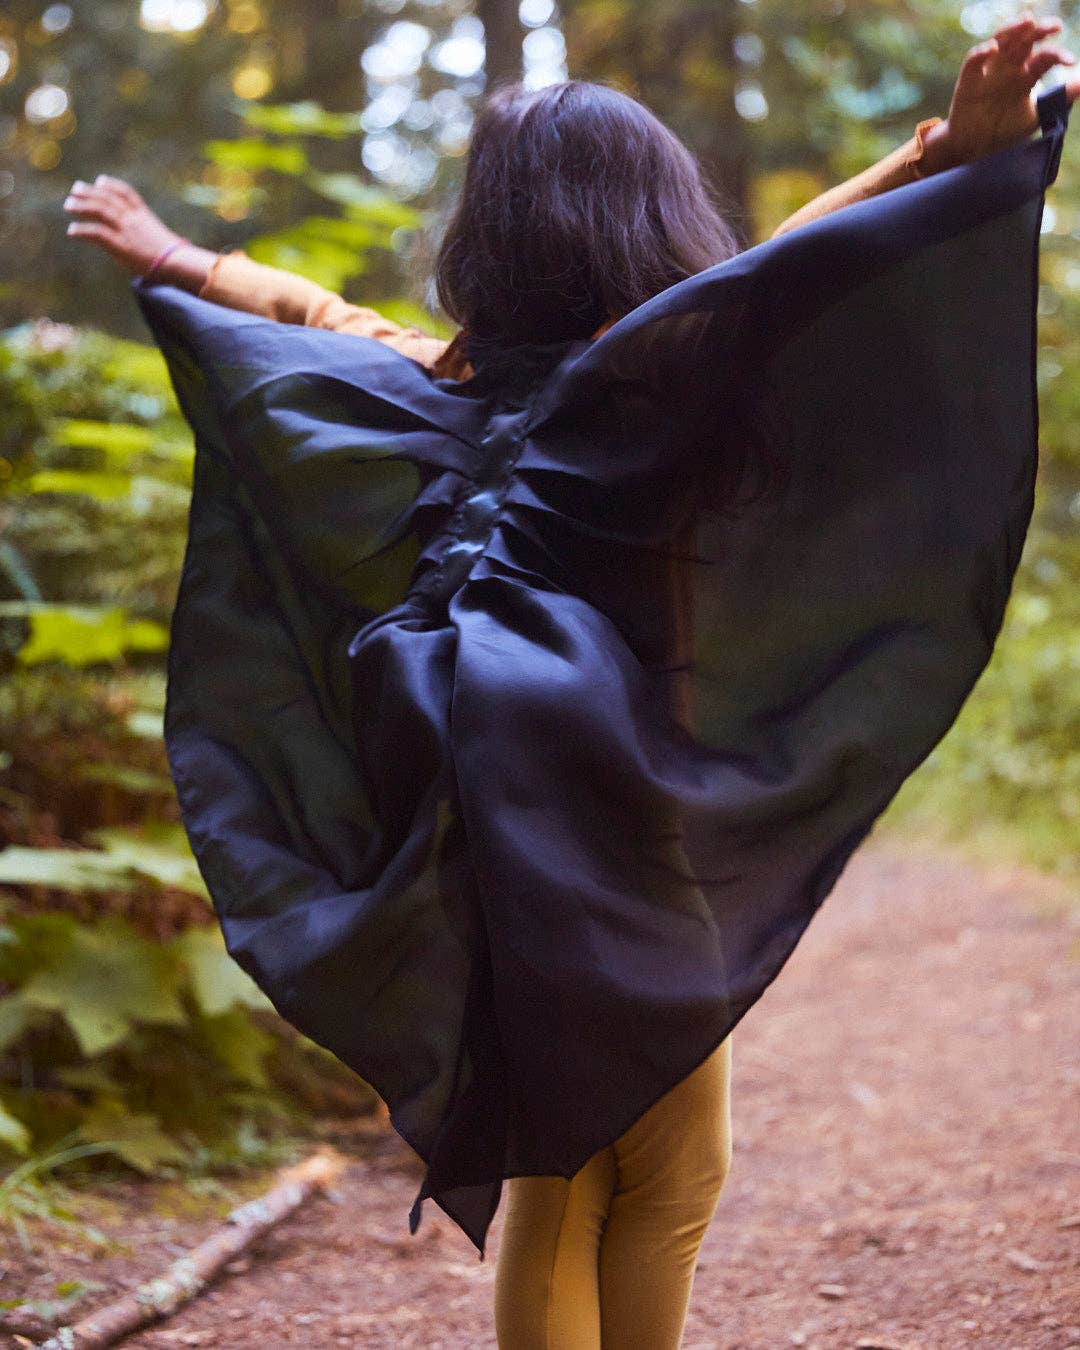 100% Silk Bat Wings - Dress-Up Play, Pretend Play, Halloween